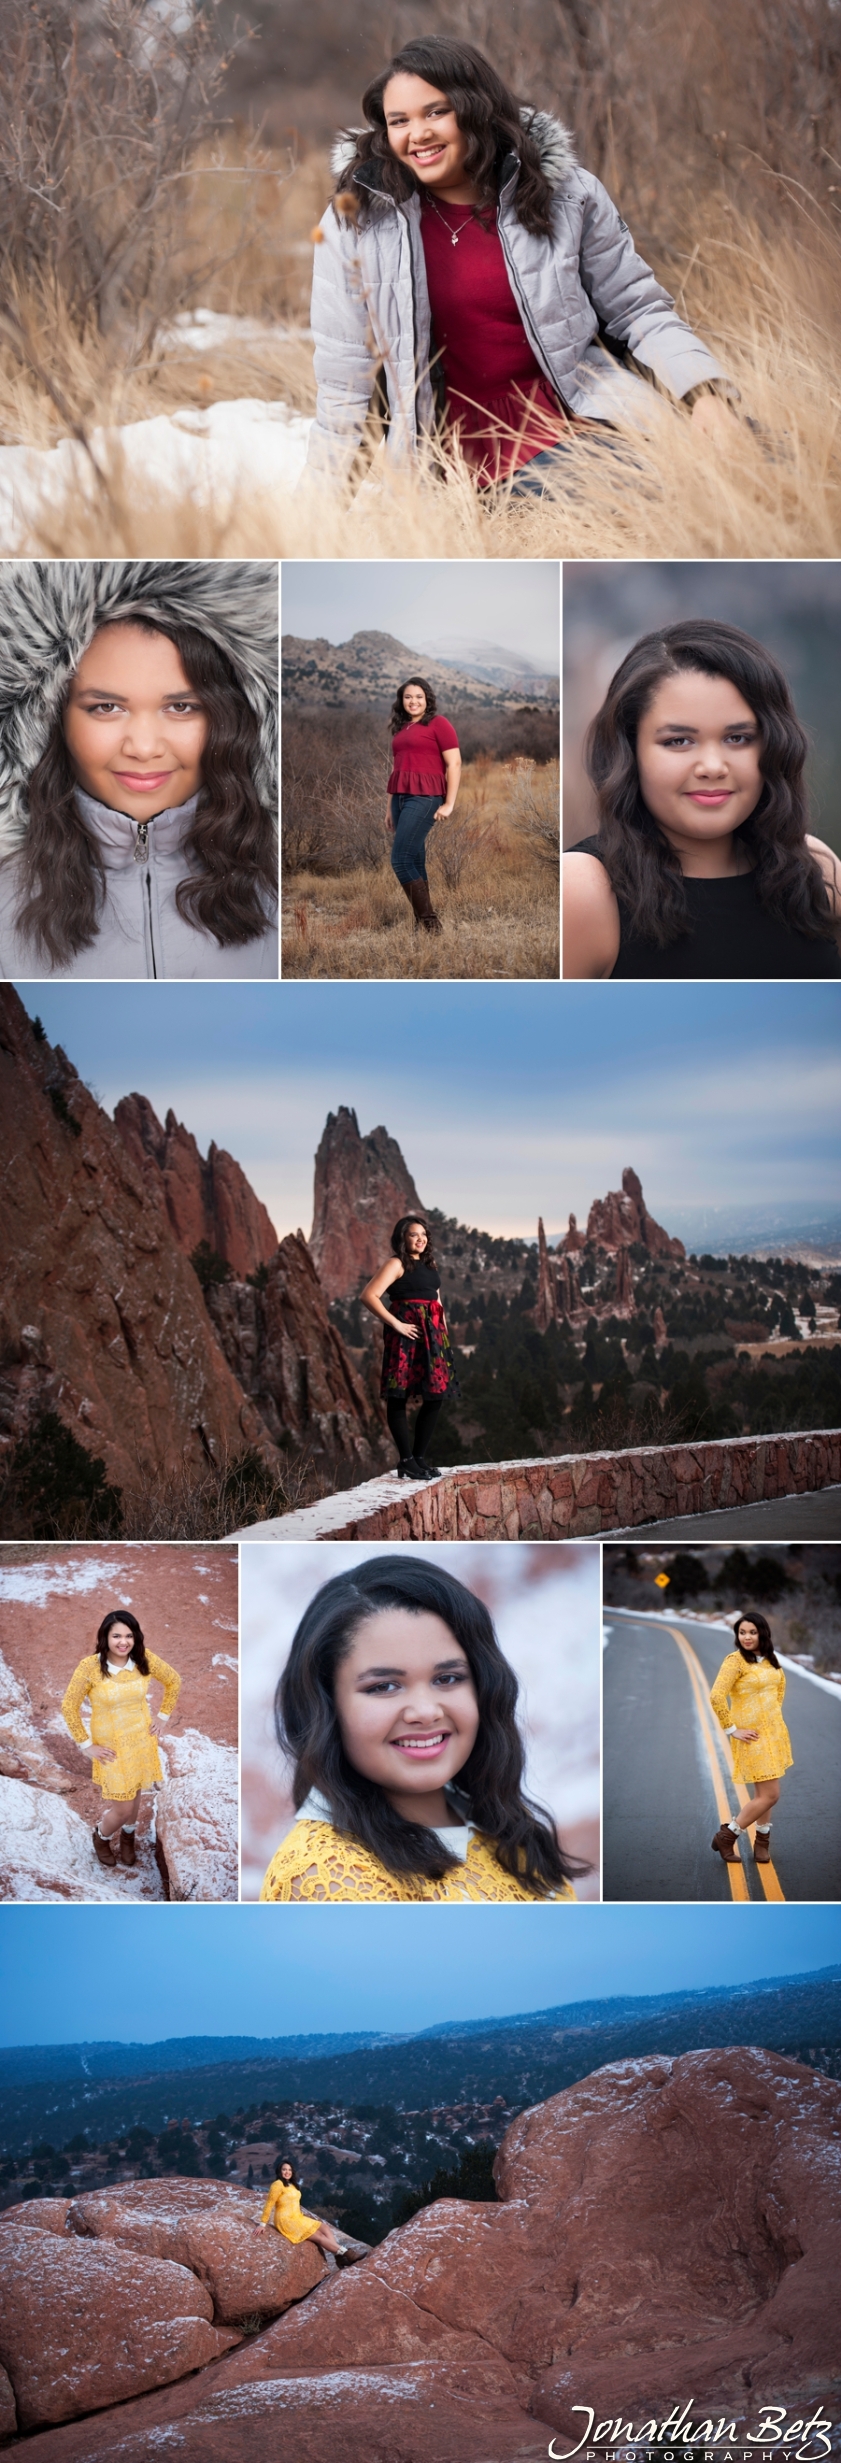 Jonathan Betz Photography Colorado Springs High School Senior Pictures Photographer